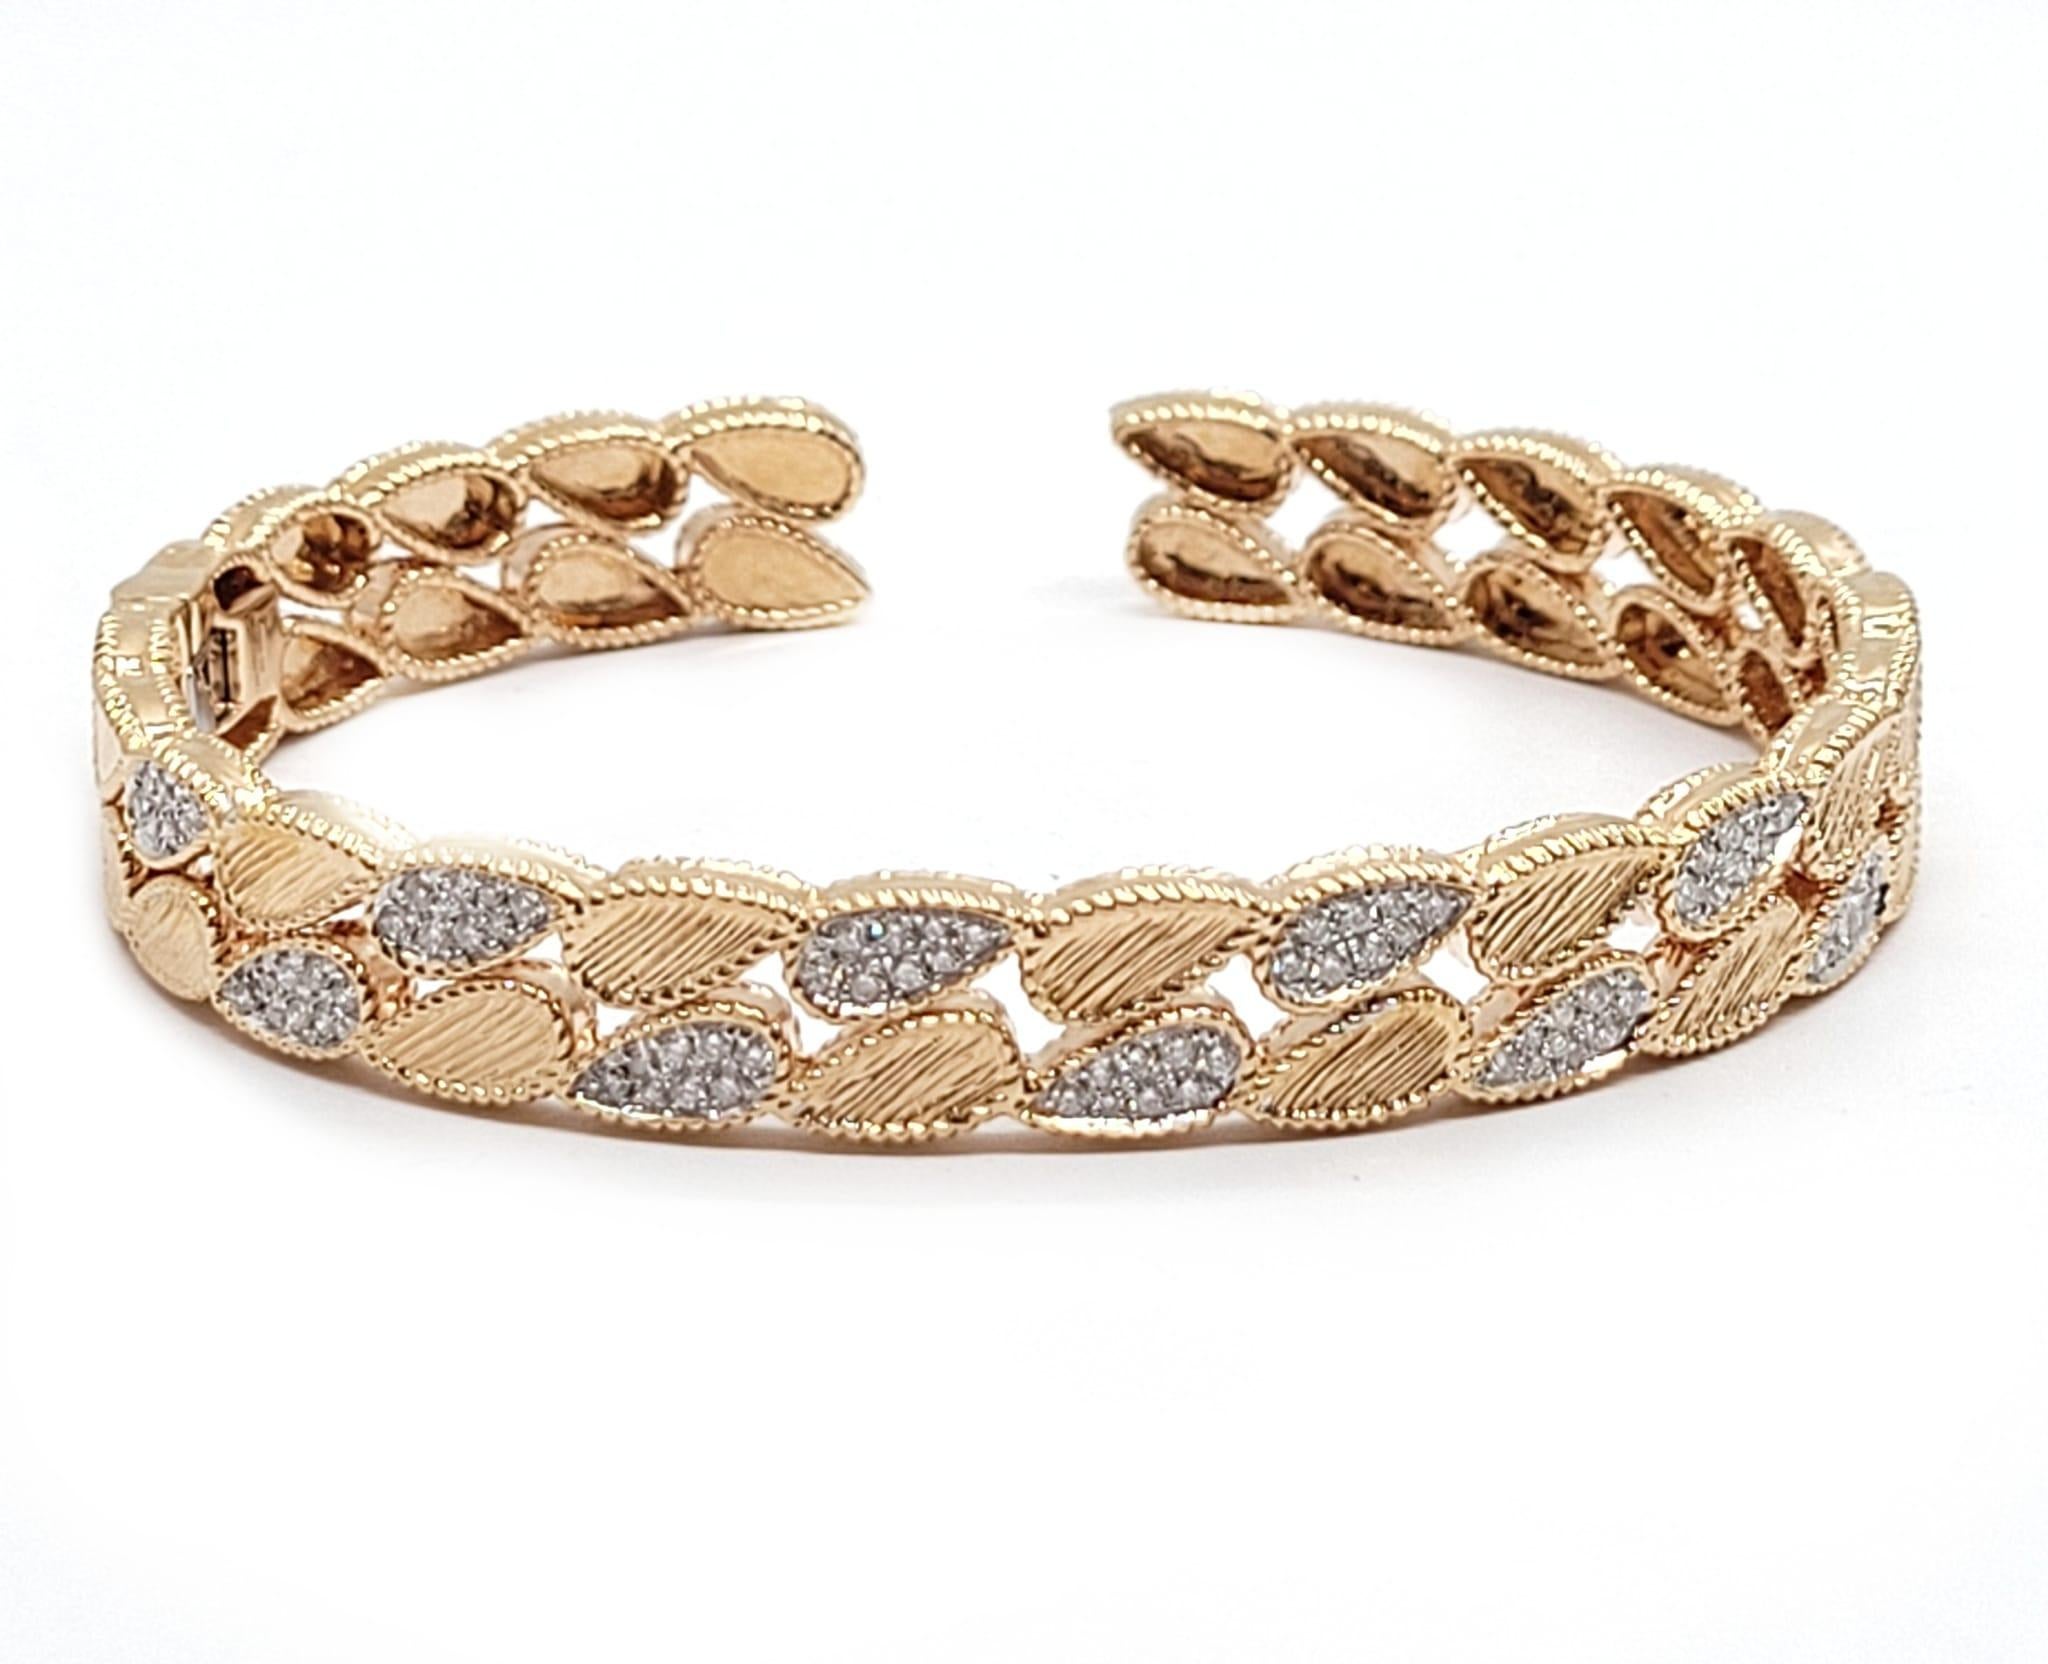 Andreoli 1.65 Carat Diamond 18 Karat Rose Gold Bracelet

This bracelet features:
- 1.65 Carat Diamond
- 25.33 Gram 18K Rose Gold
- Made In Italy